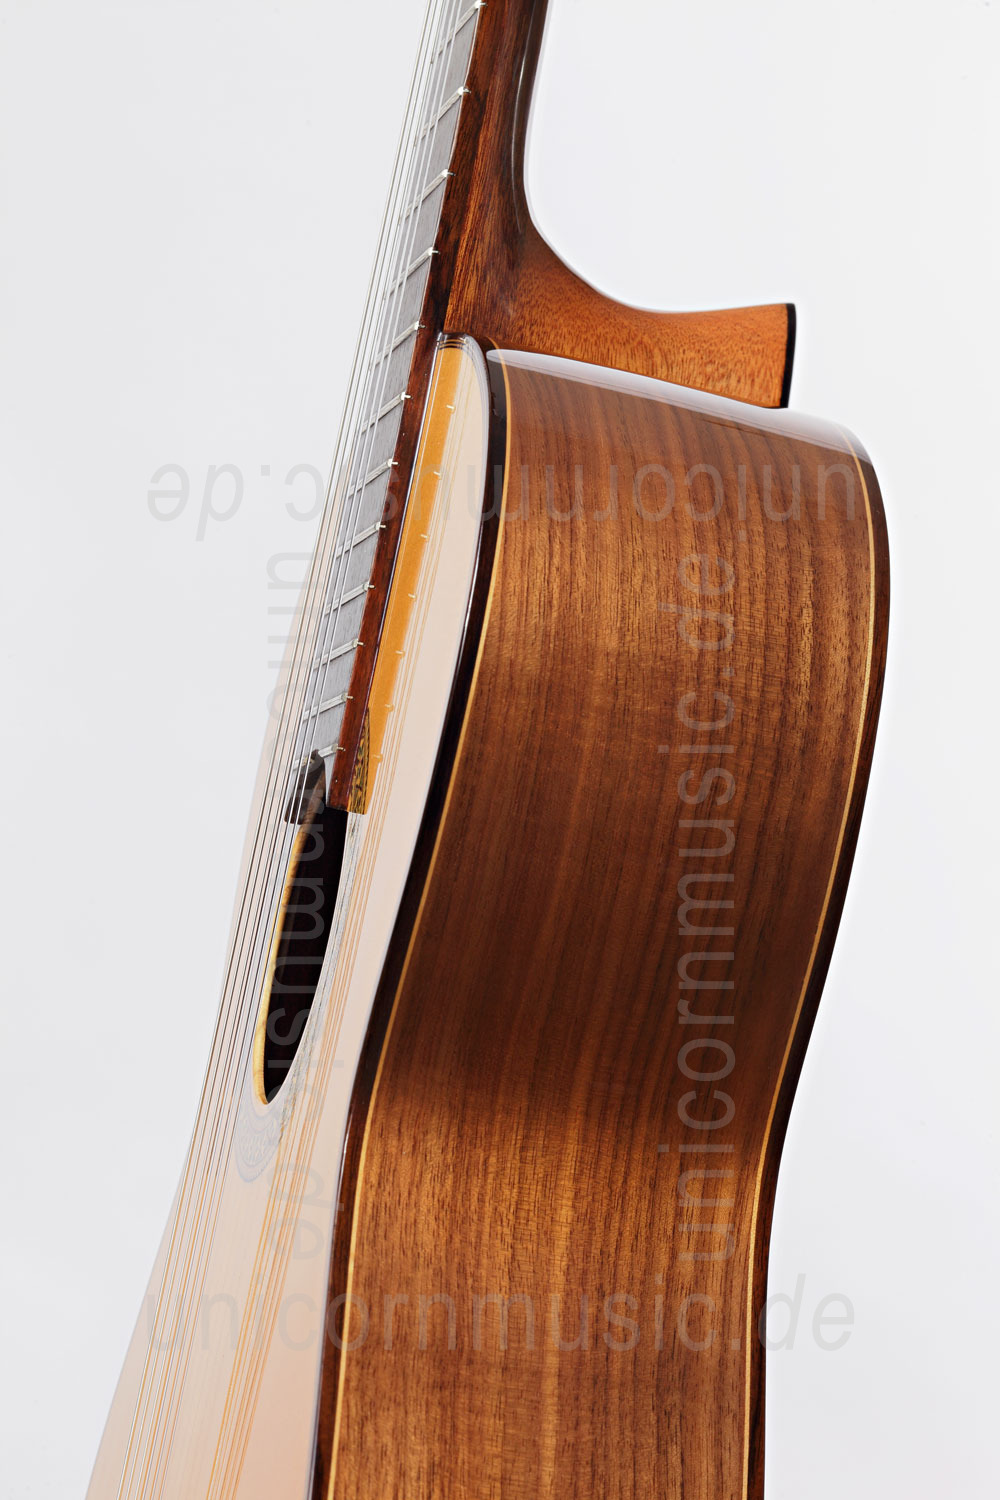 to article description / price Spanish Classical Guitar VALDEZ MODEL 5 S - solid top